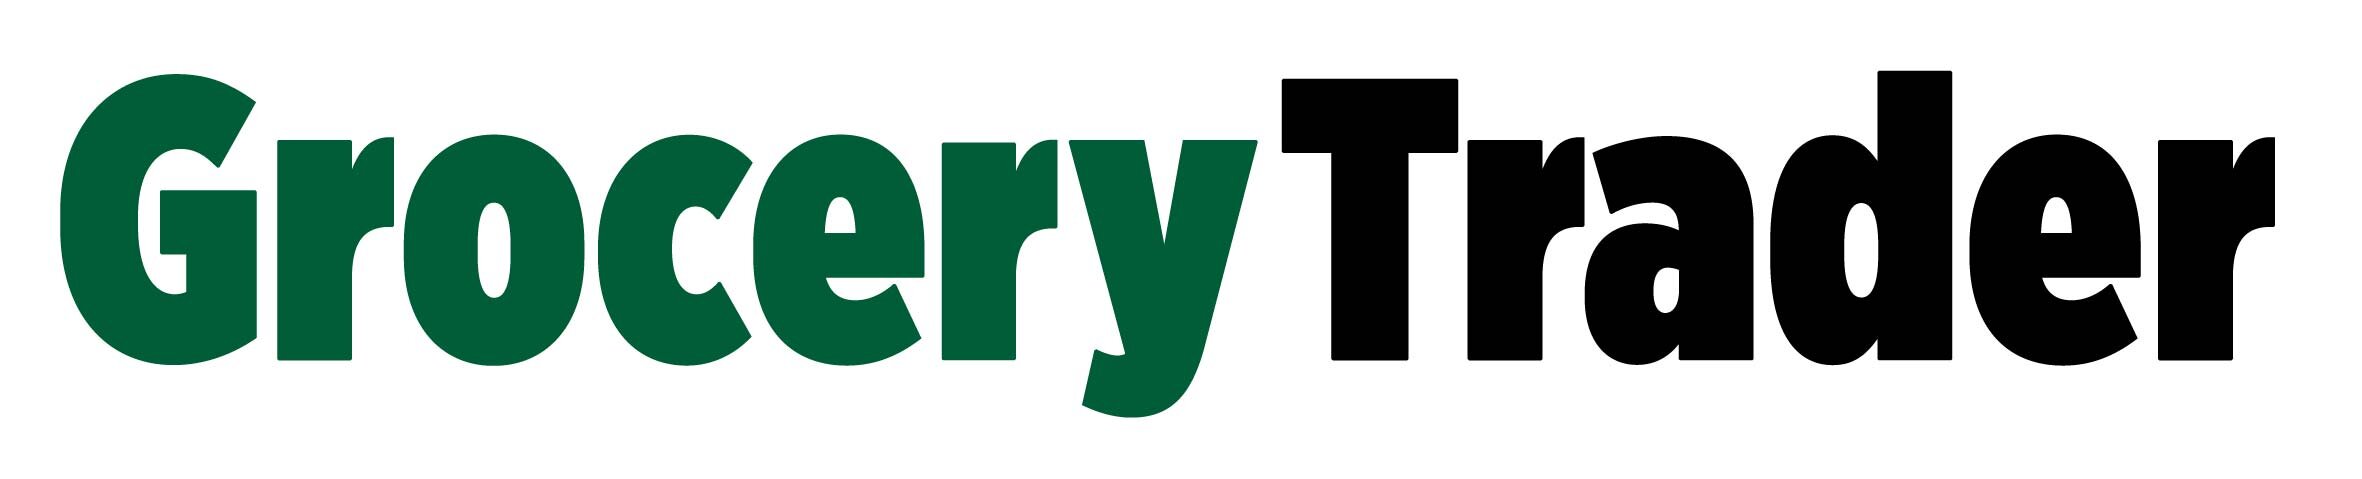 Grocery Trader Logo.jpeg